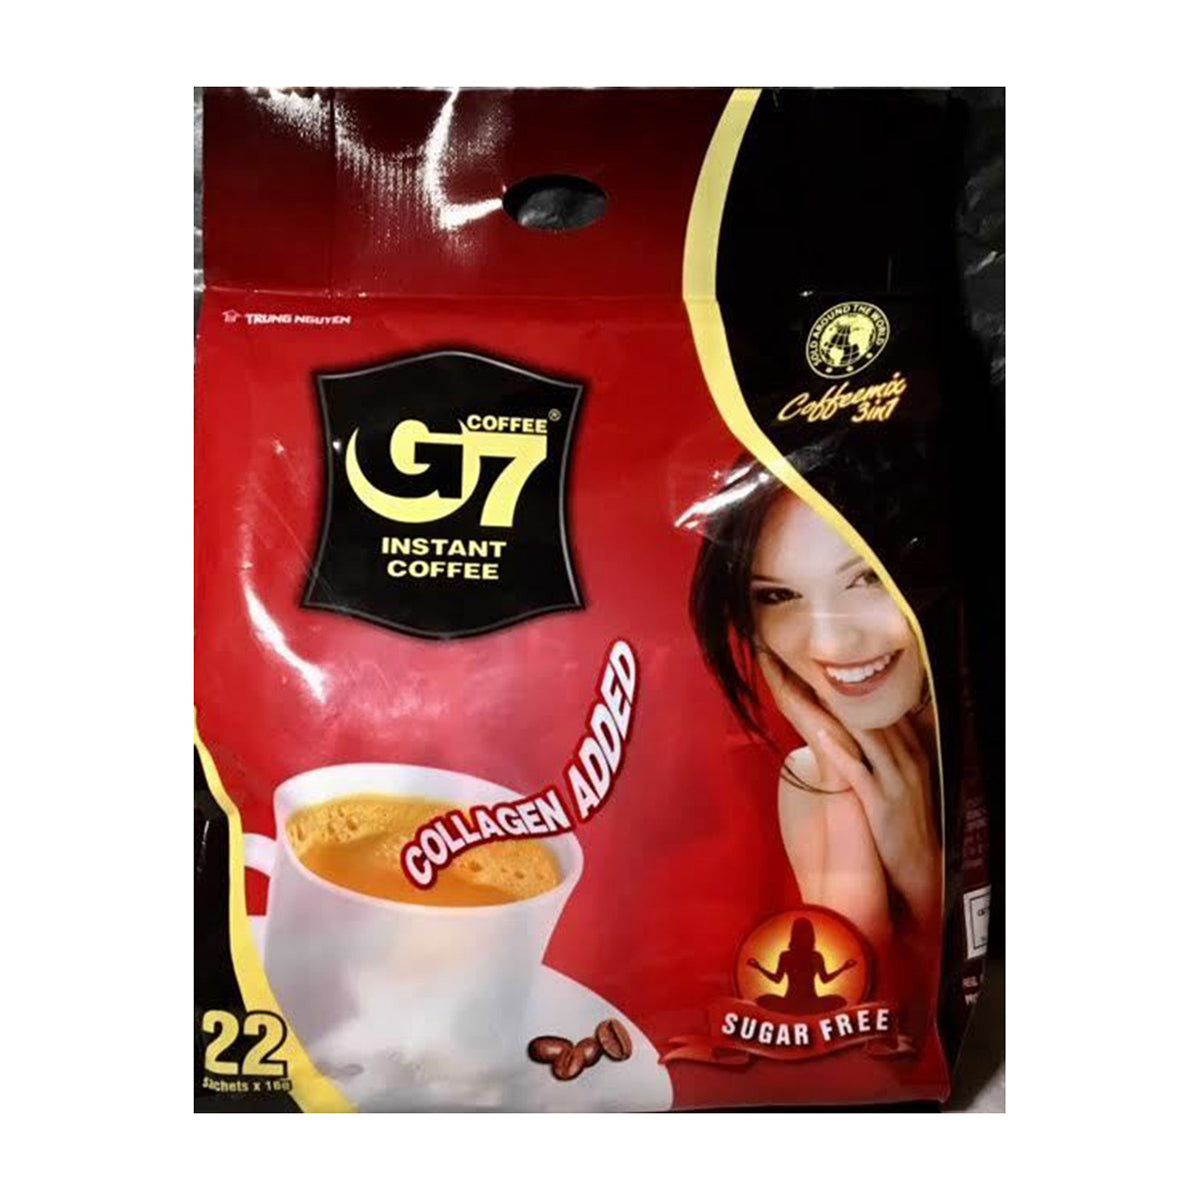 trung nguyen g7 collagen coffee - 22pc